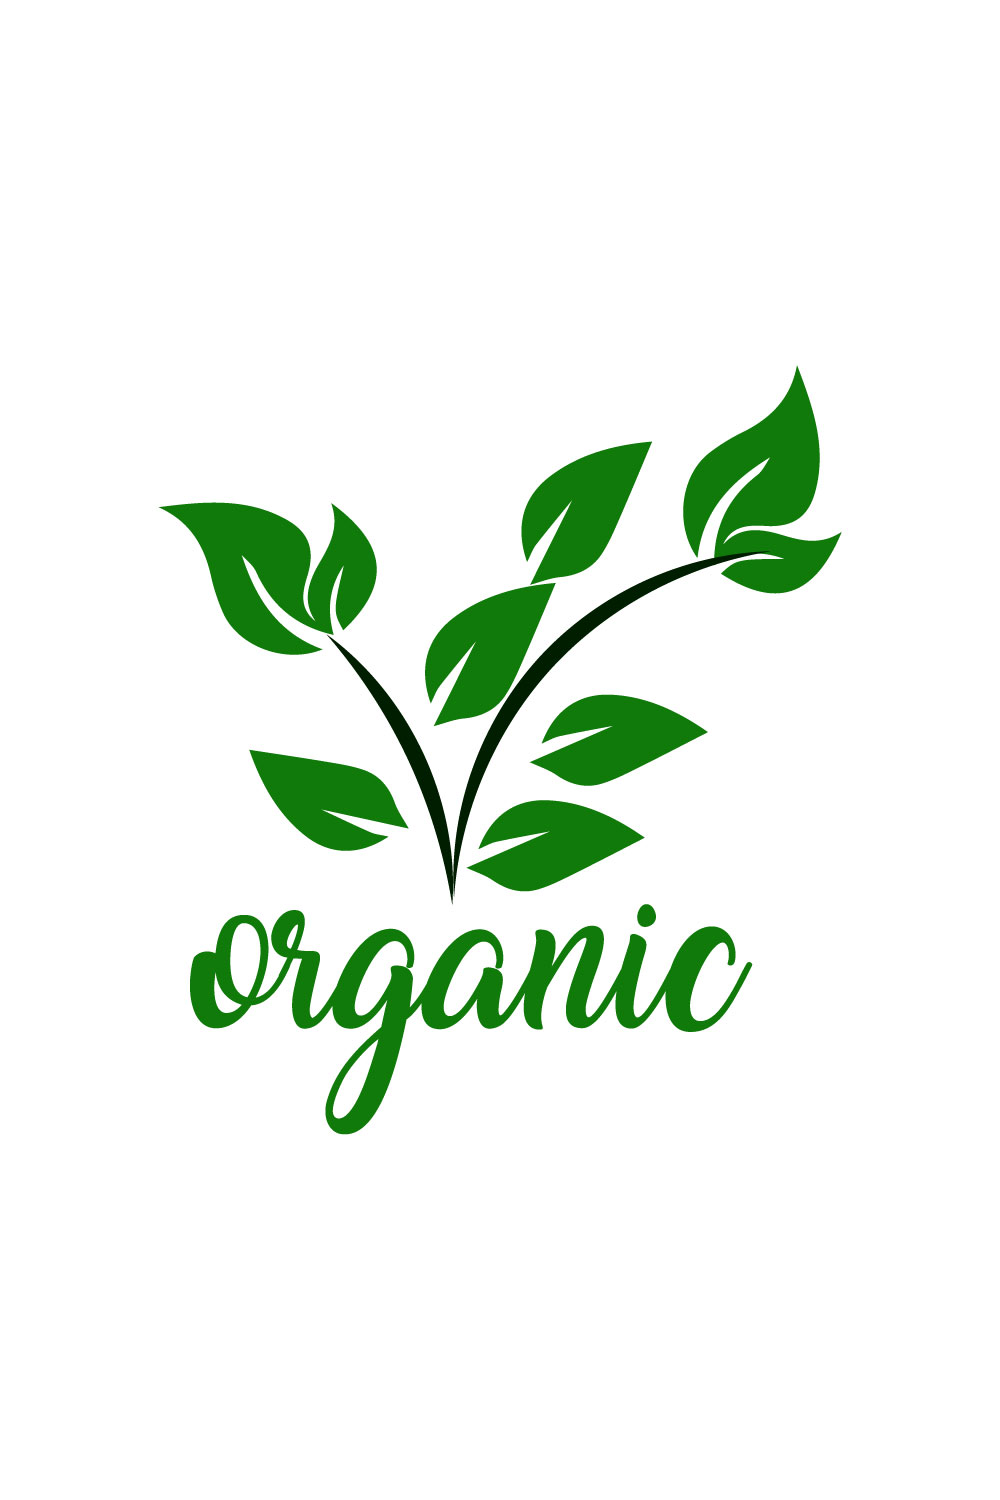 Free green leaf organic logo pinterest preview image.